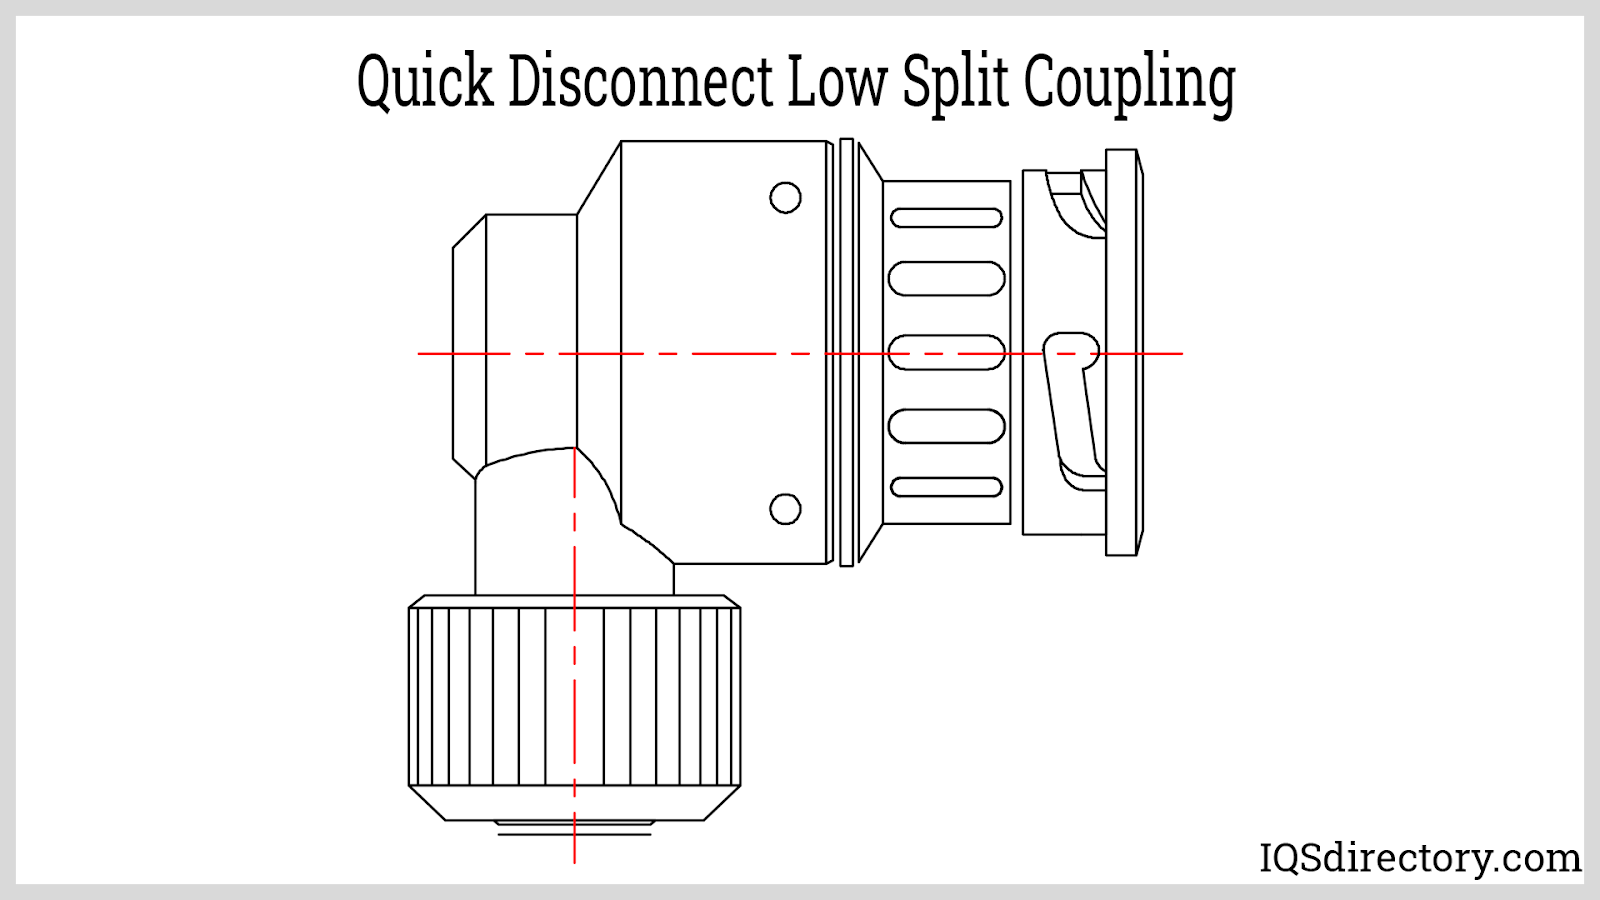 Split Sleeve Coupling, Product Catalog